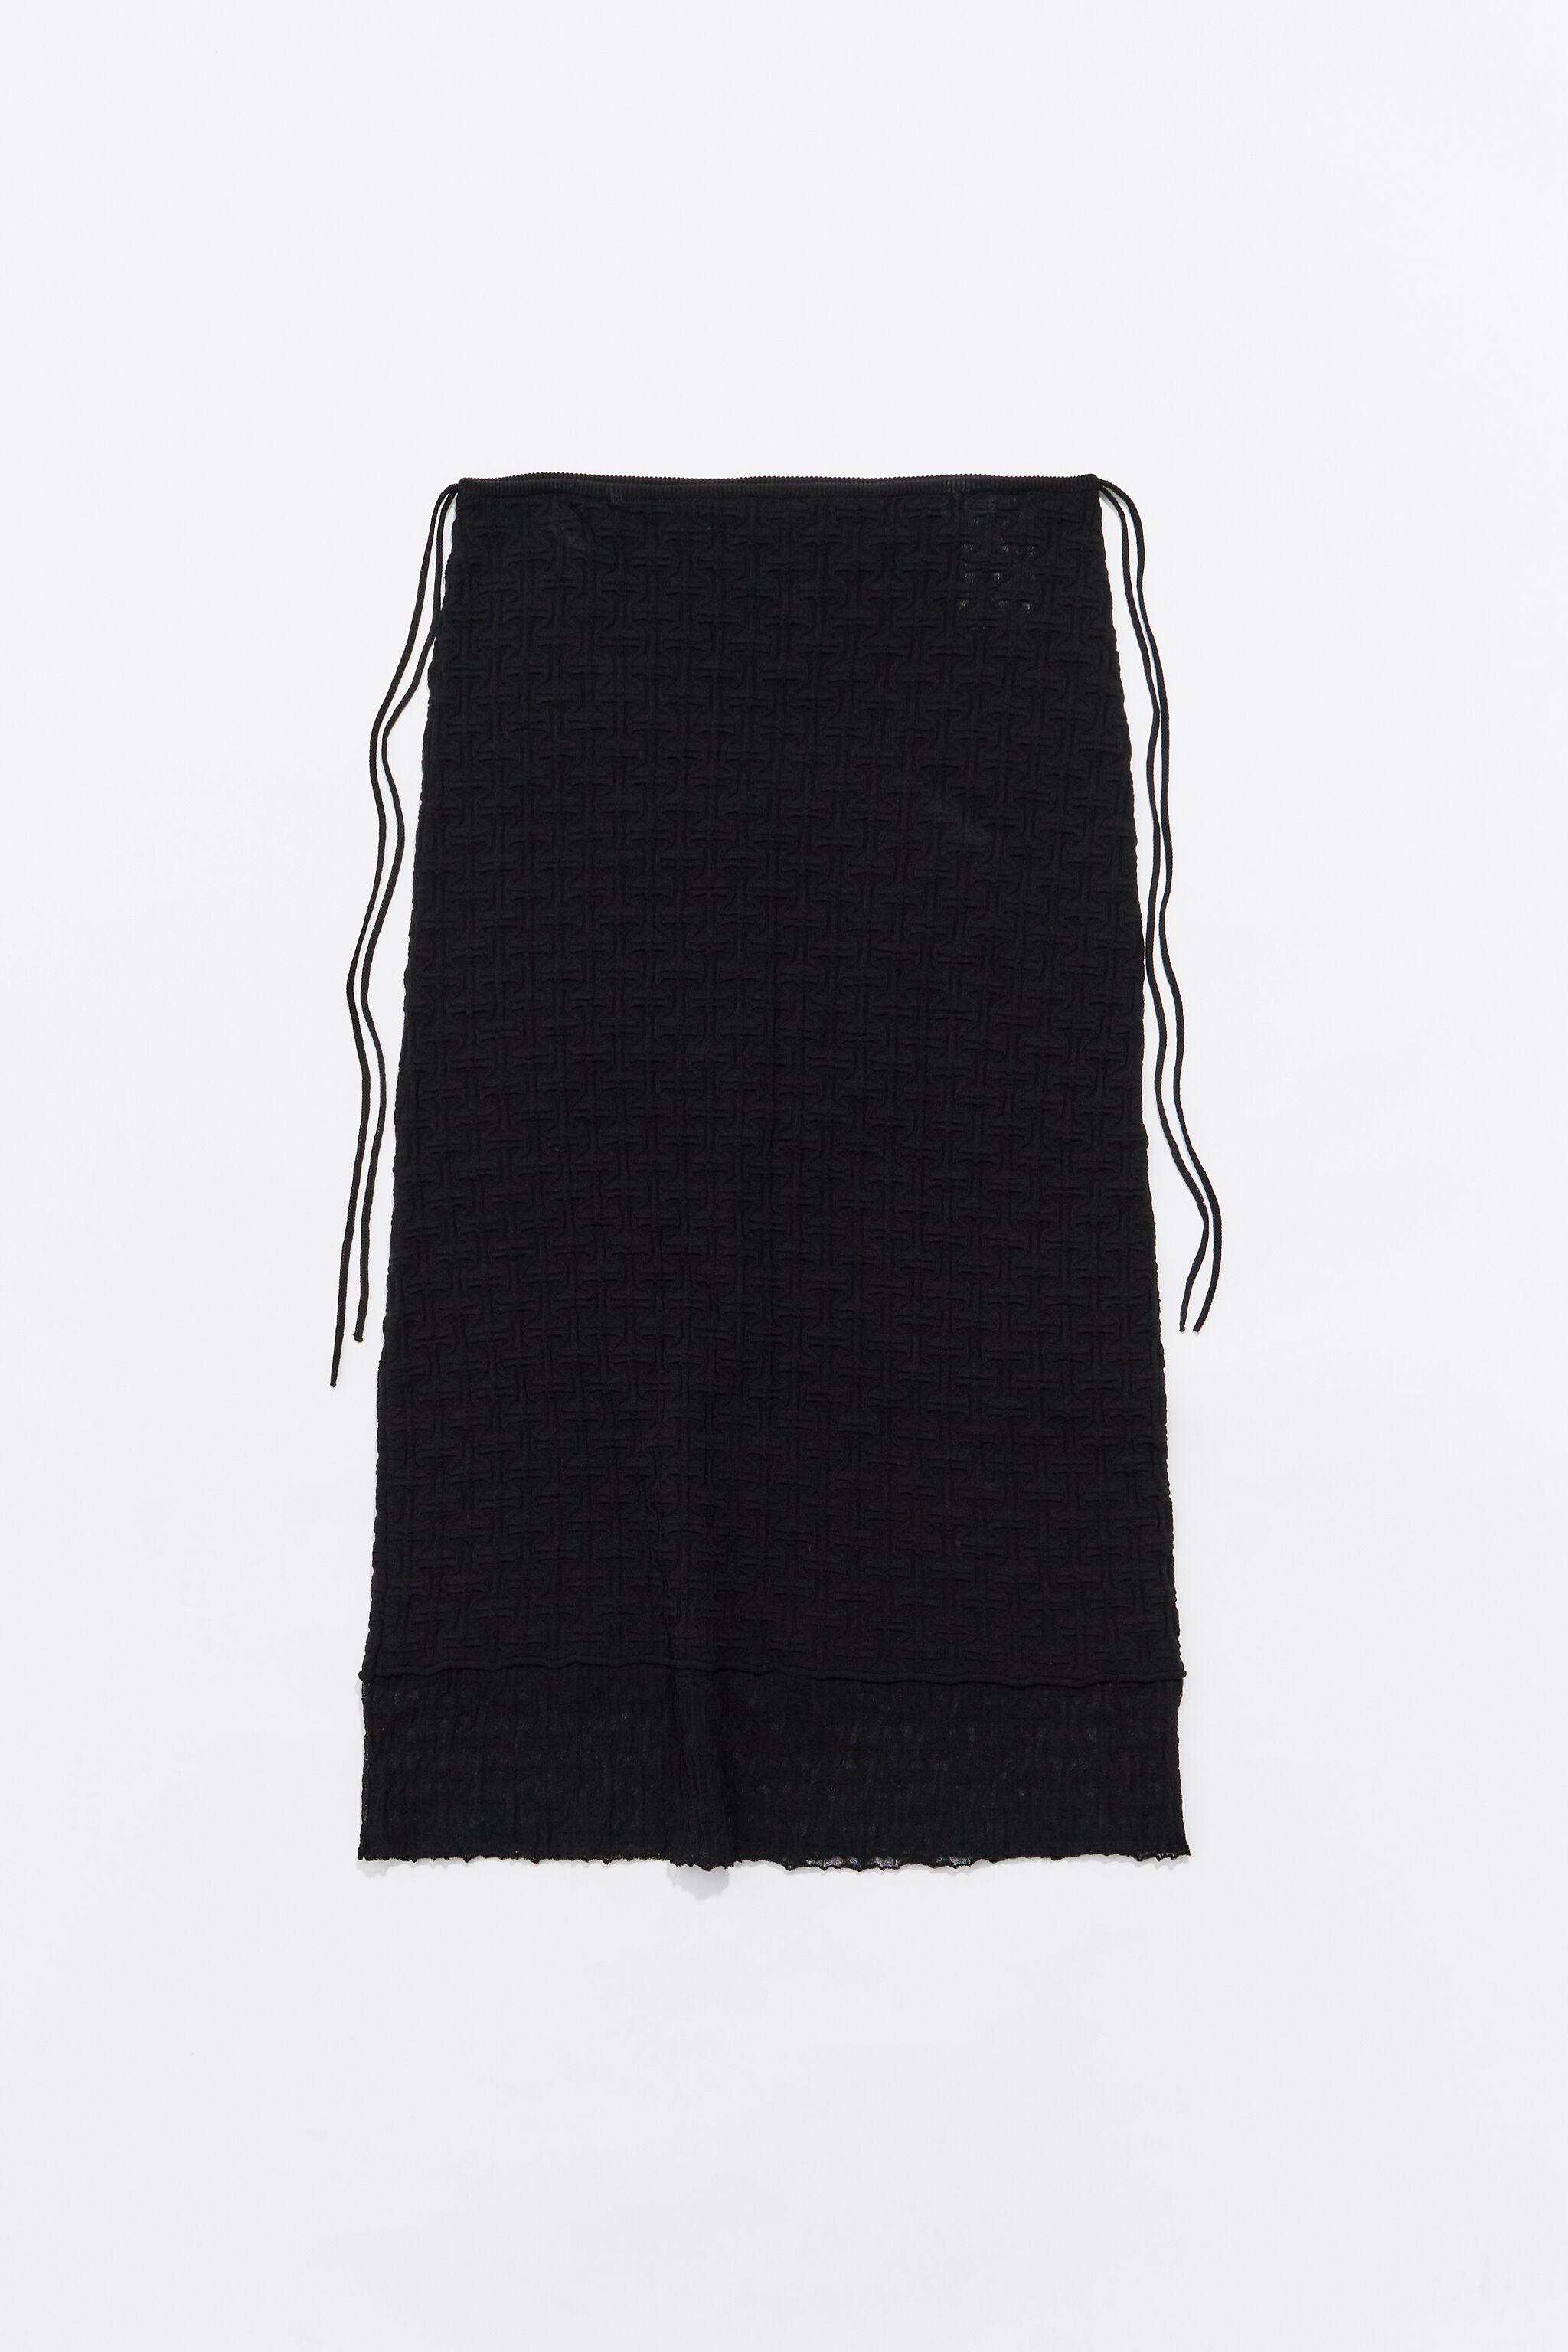 Straight black knit skirt